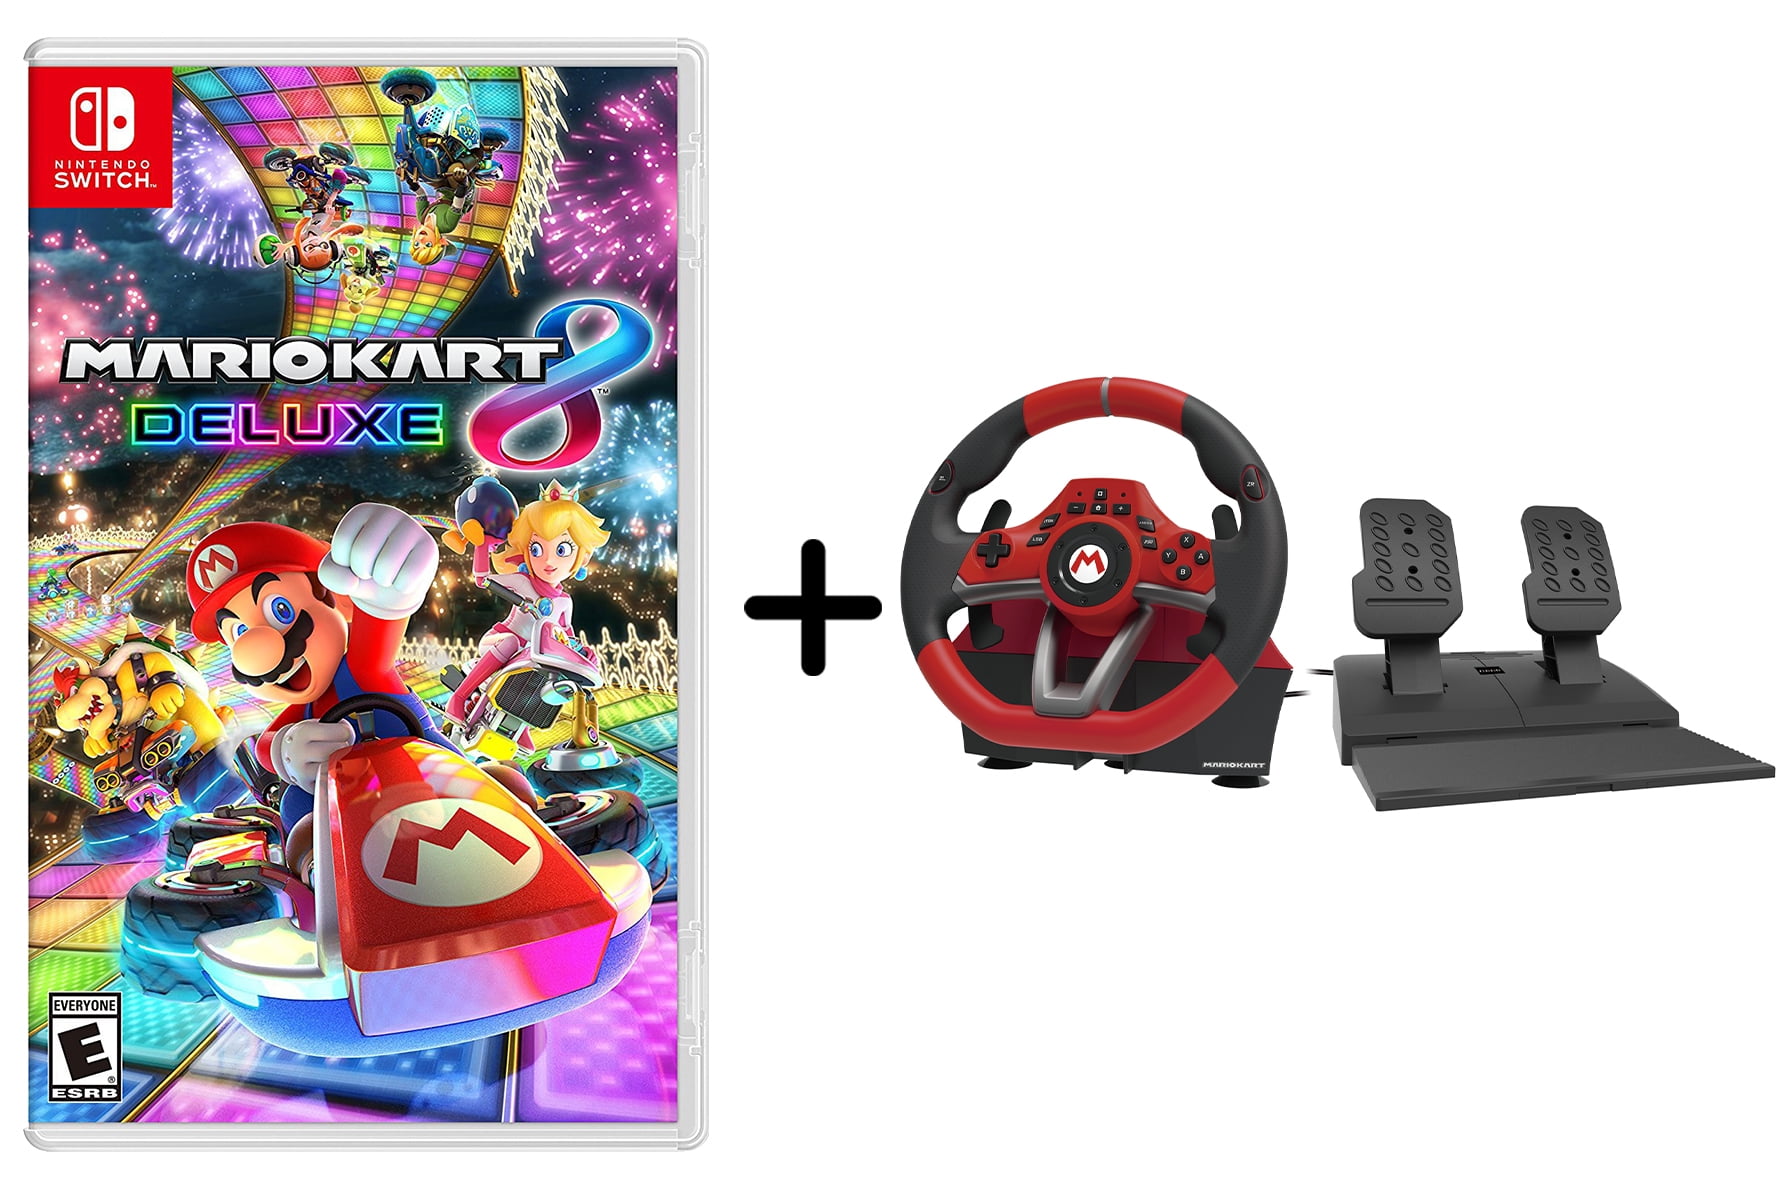 Mario Kart Racing Wheel Pro Deluxe for Switch - Hardware